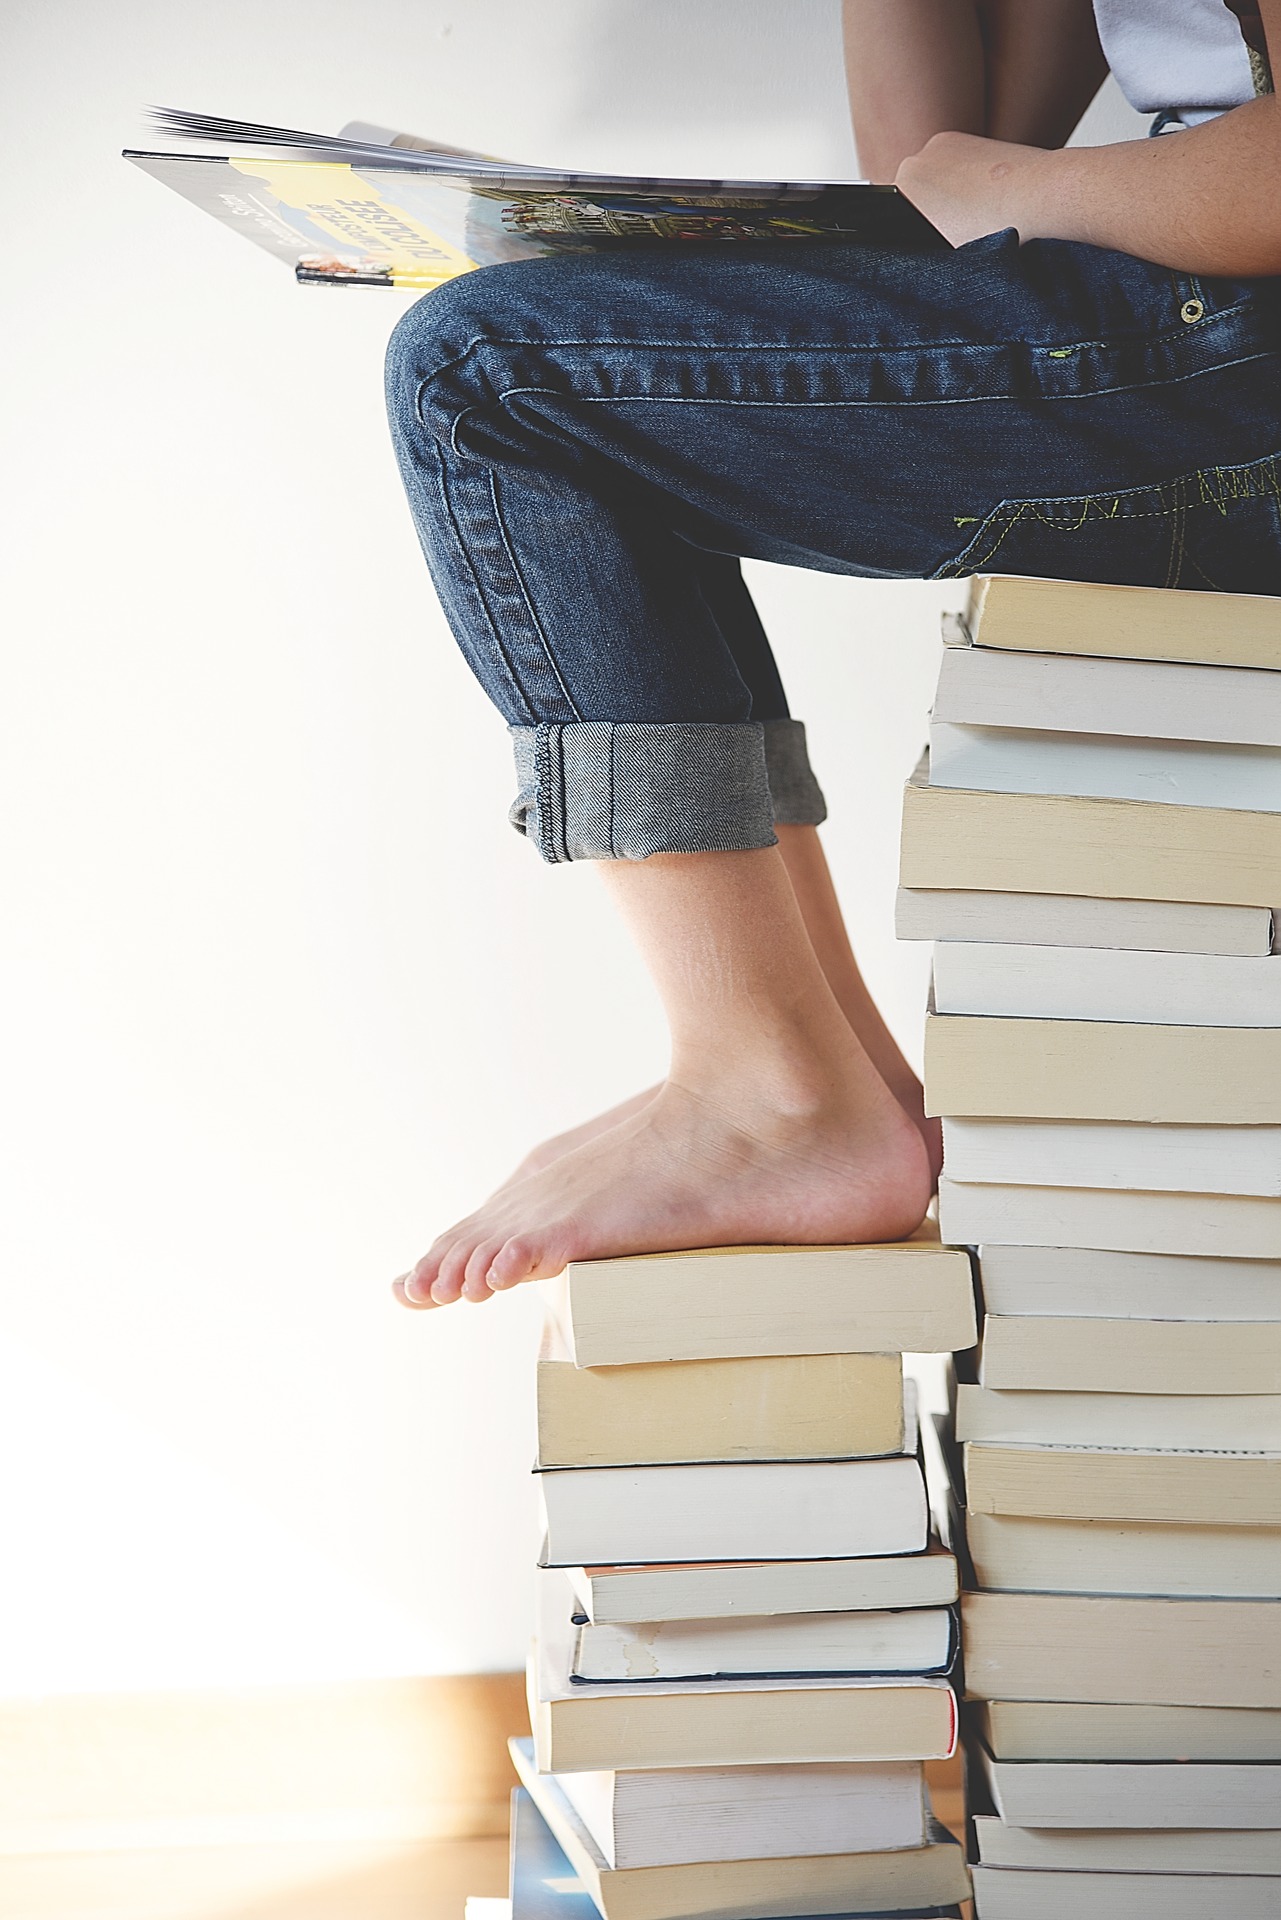 child's feet on pile of books